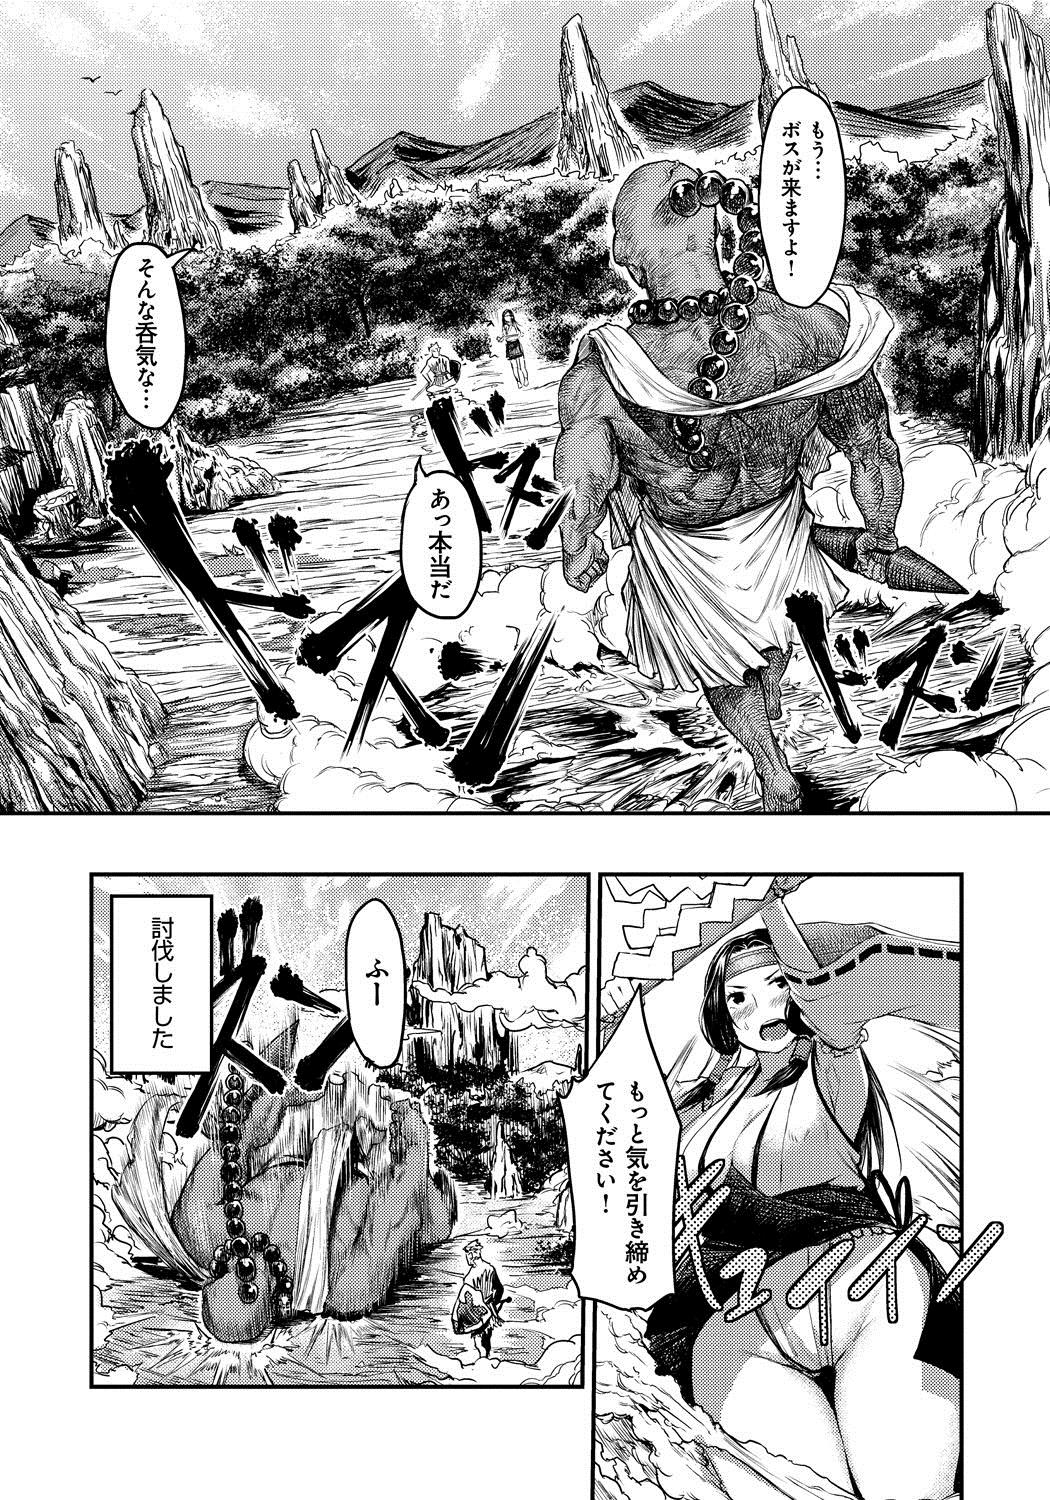 [Anthology] Lord of Walkure Adult Comic Anthology 2 - R-18 Ban de Maiban Ottanoshimi~! ...na Kishi-sama no Koto desu kara Sazoya 107